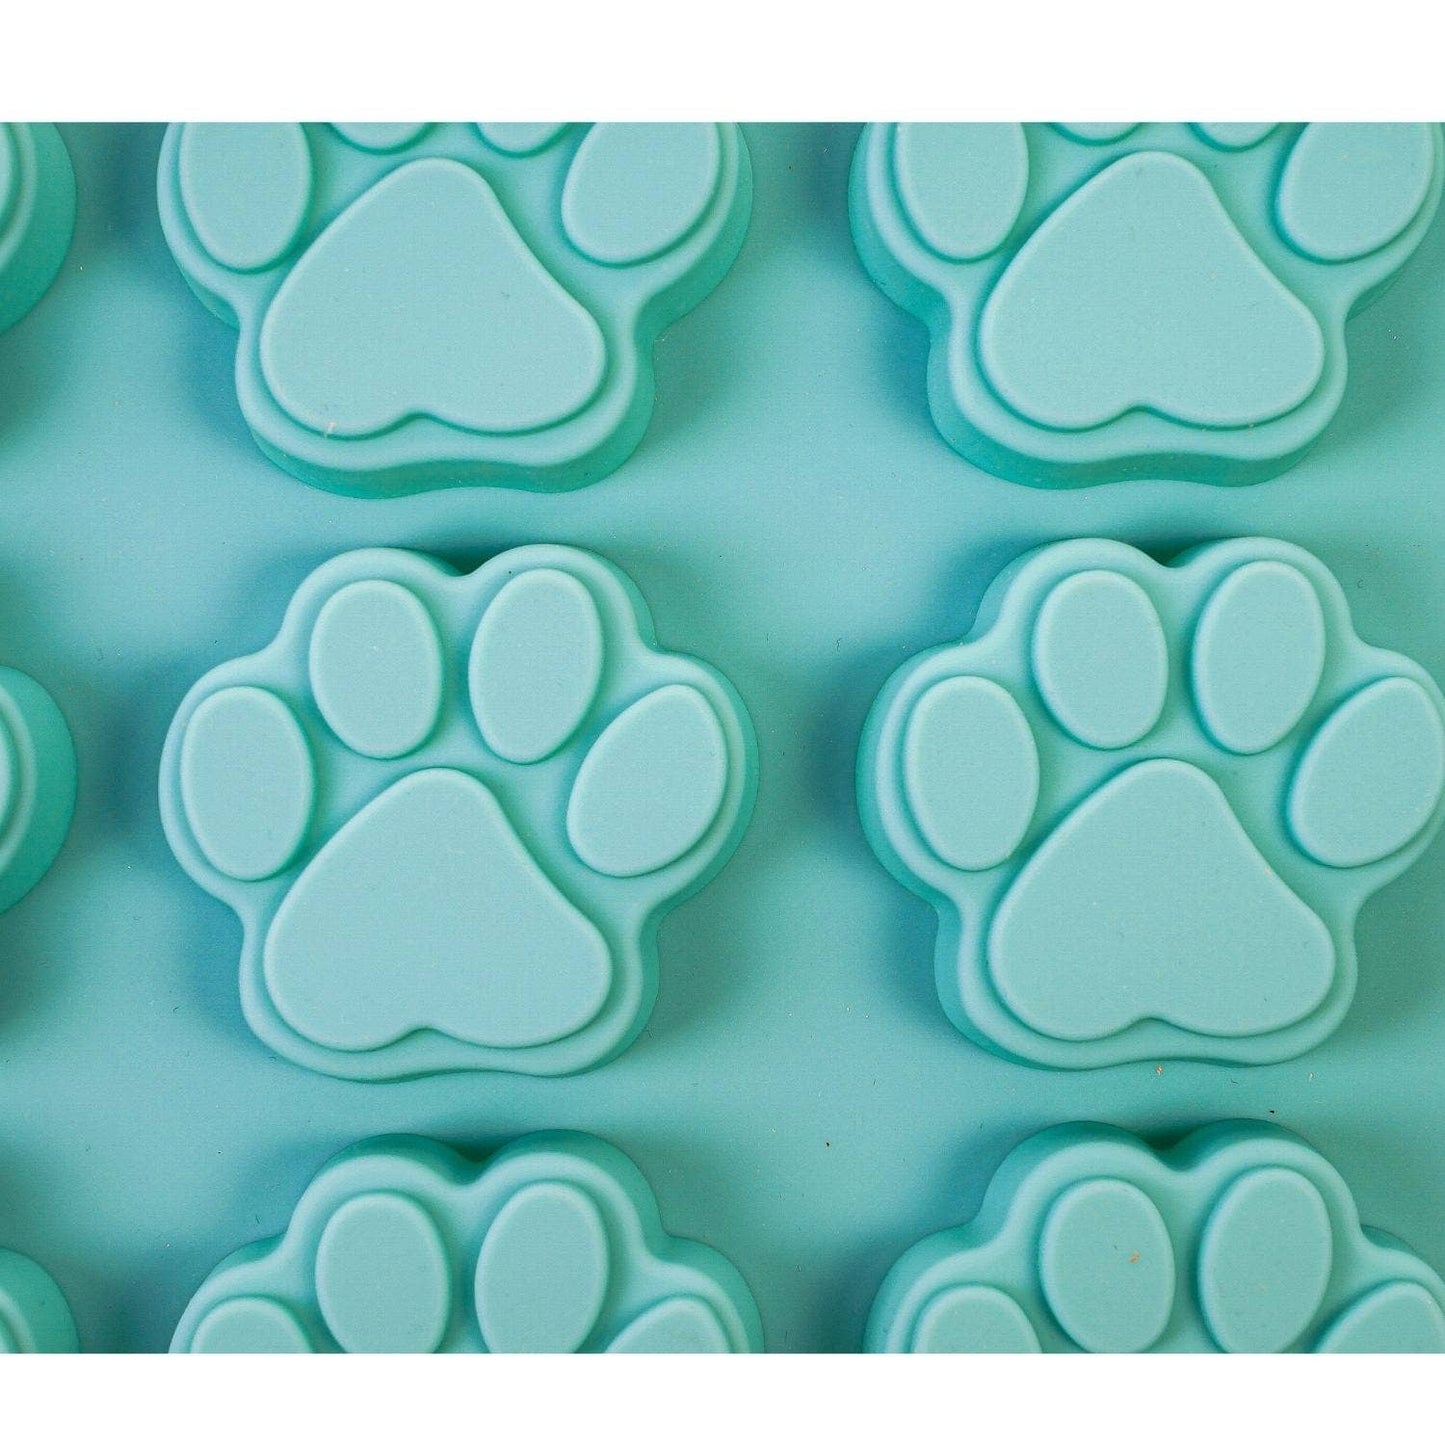 Jojo Modern Pets - Paw Print 3 in 1 Silicone Baking Treat Tray  Image